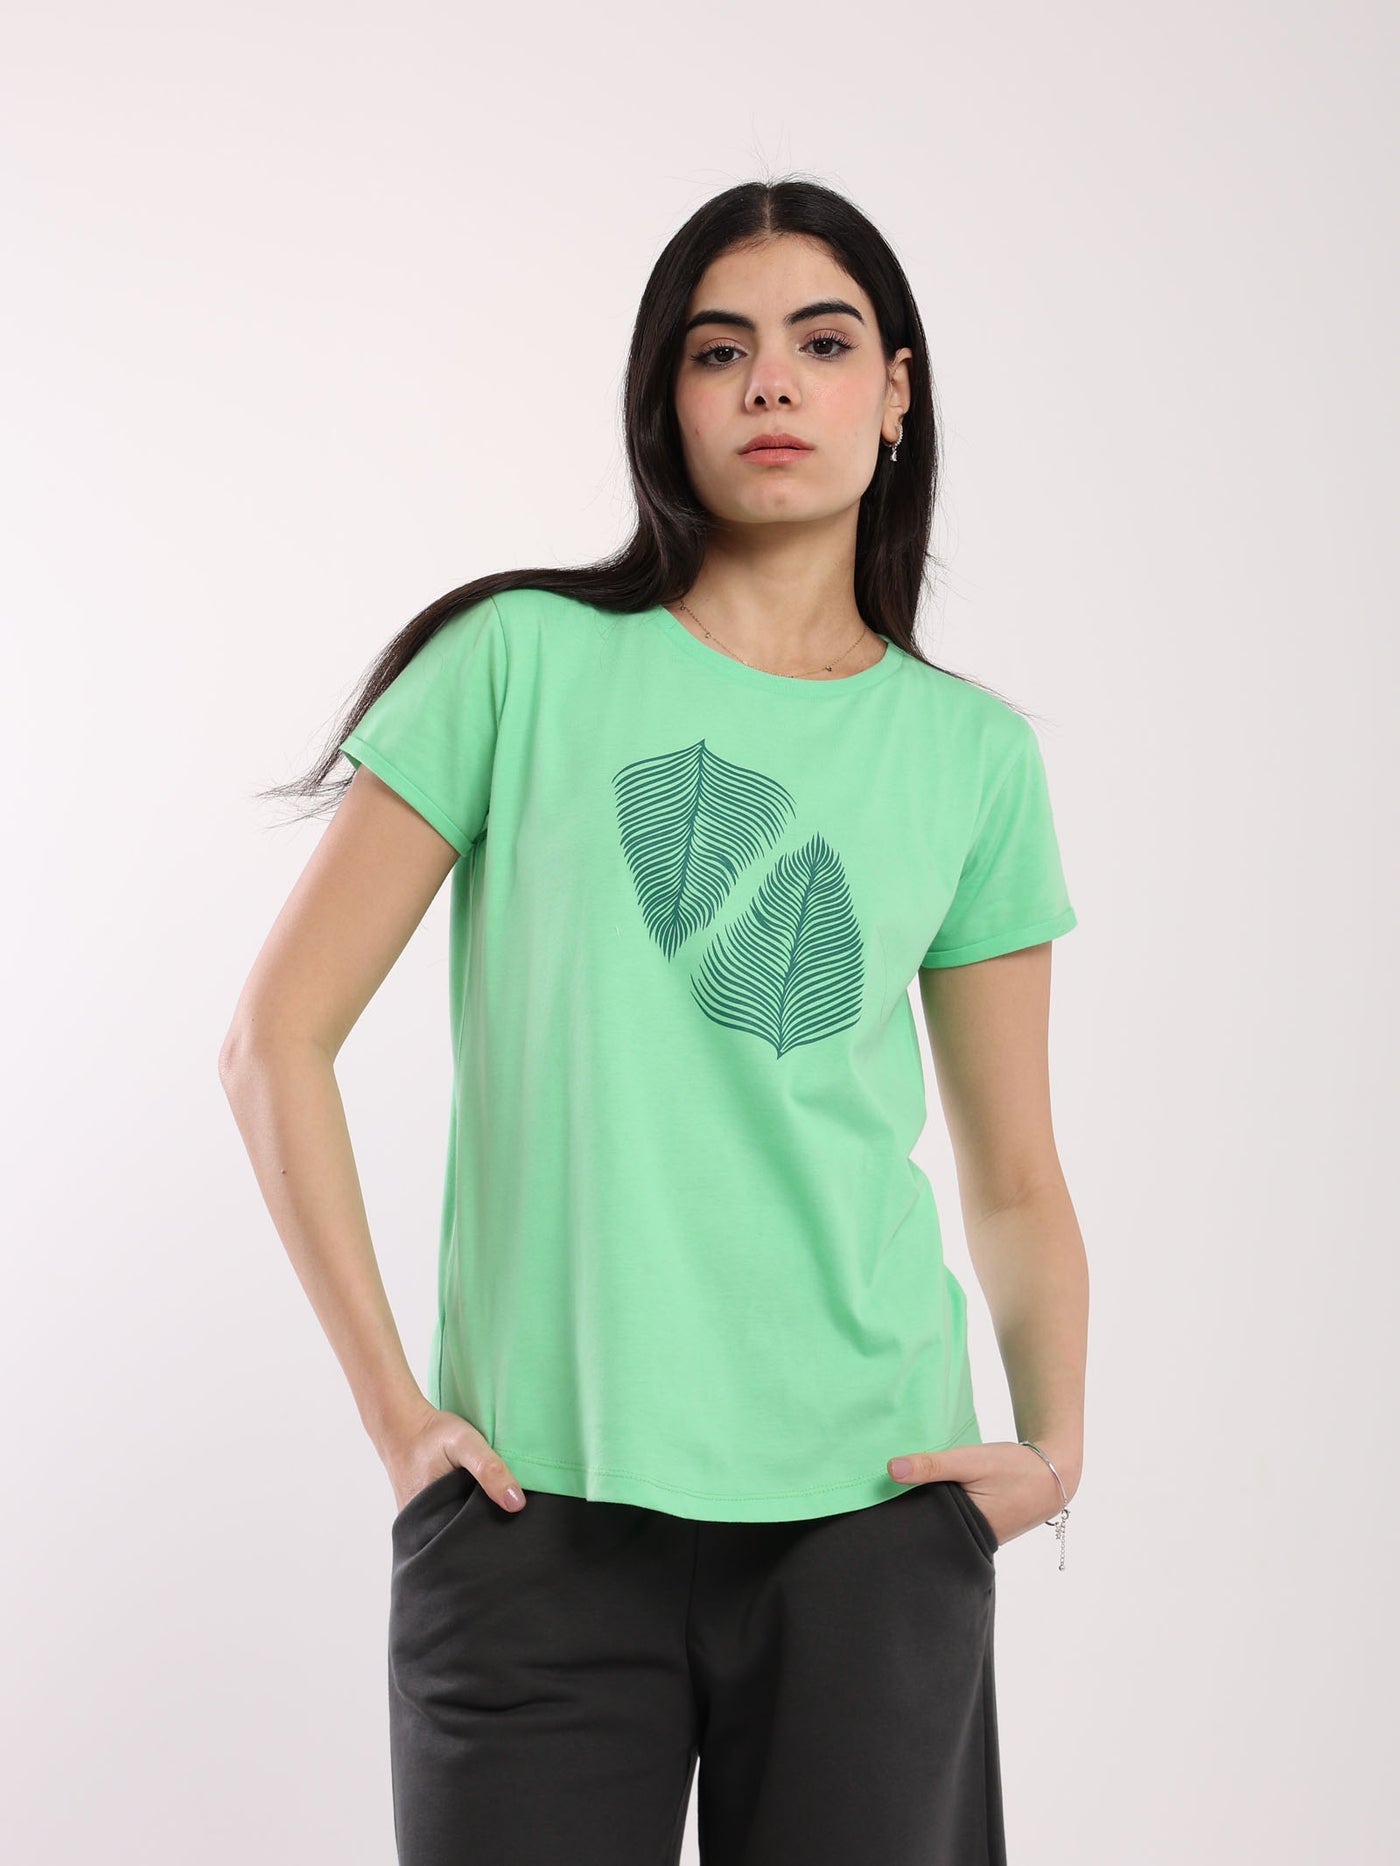 T-Shirt - "Leaves" Print - Short Sleeves